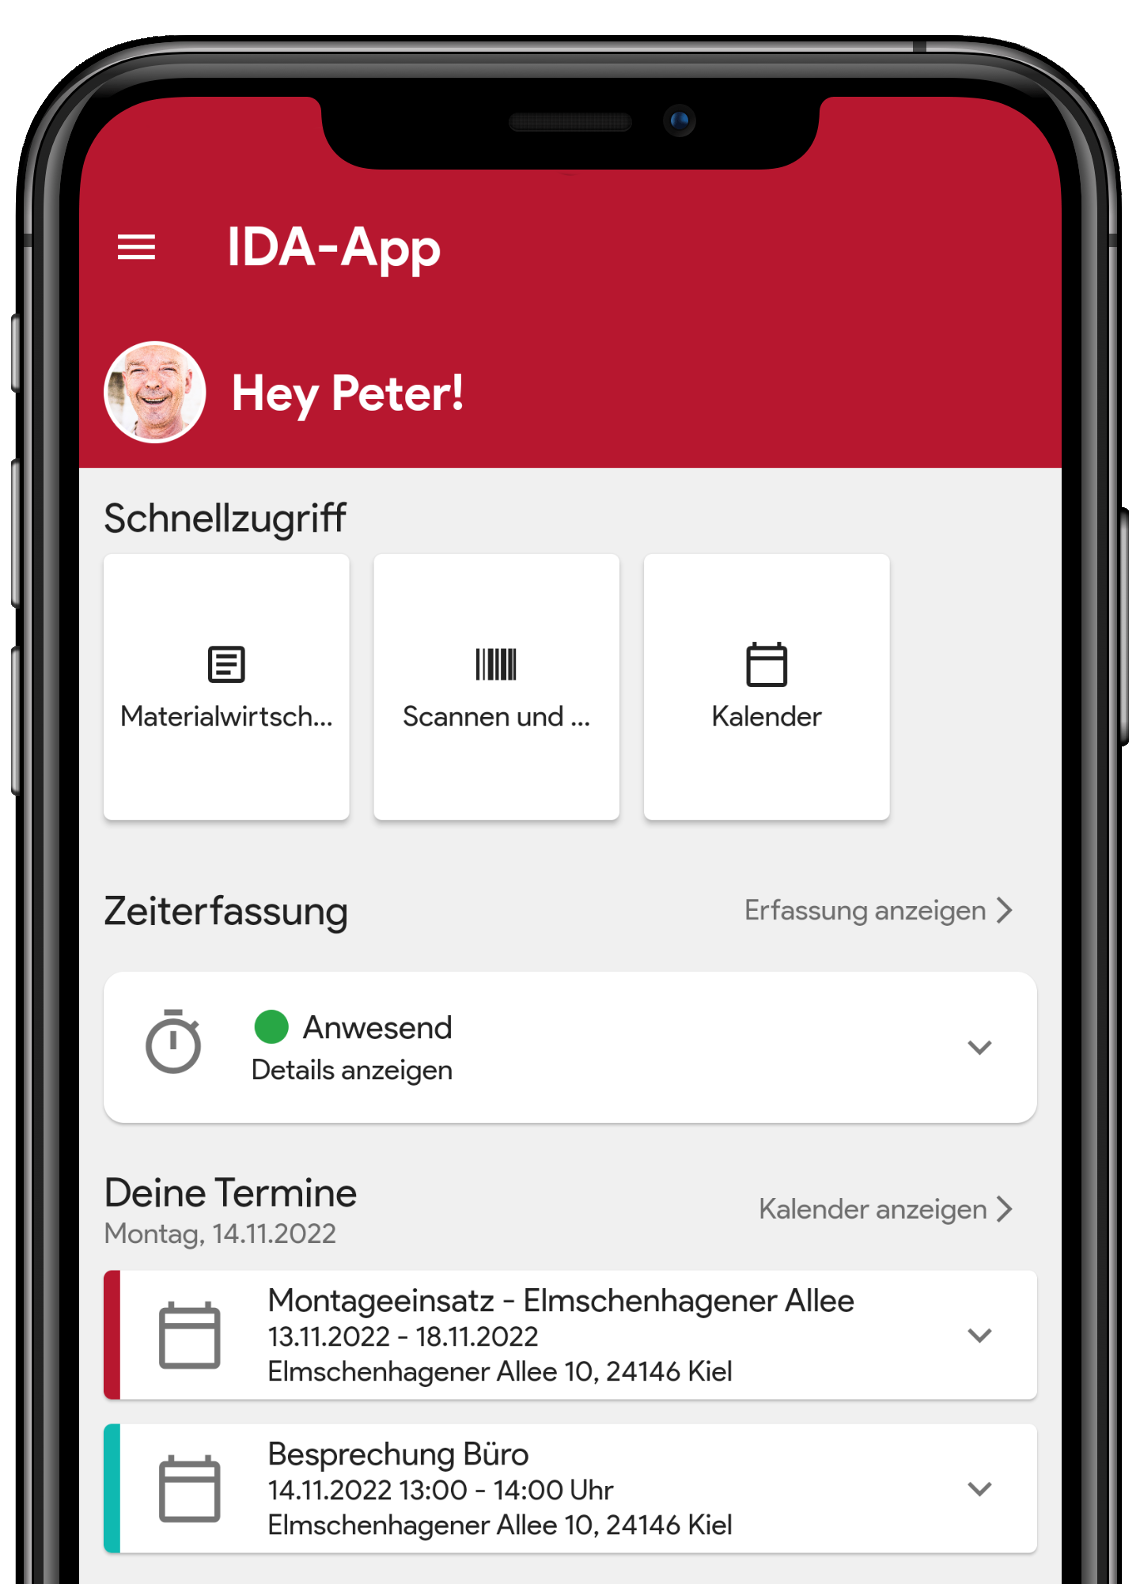 IDA-App on Smartphone